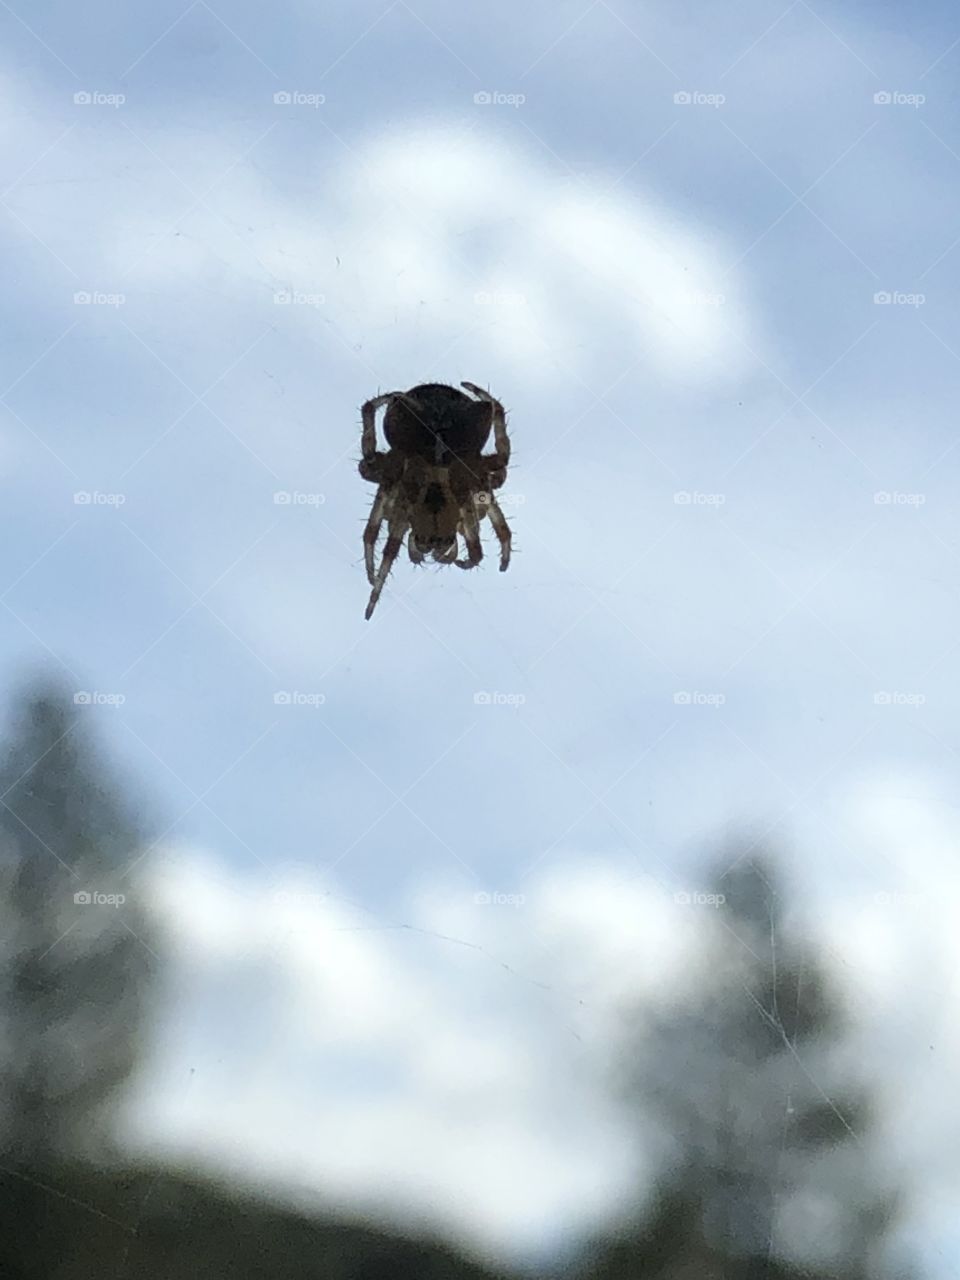 Spider looking into hotel room, Tuolumne, California